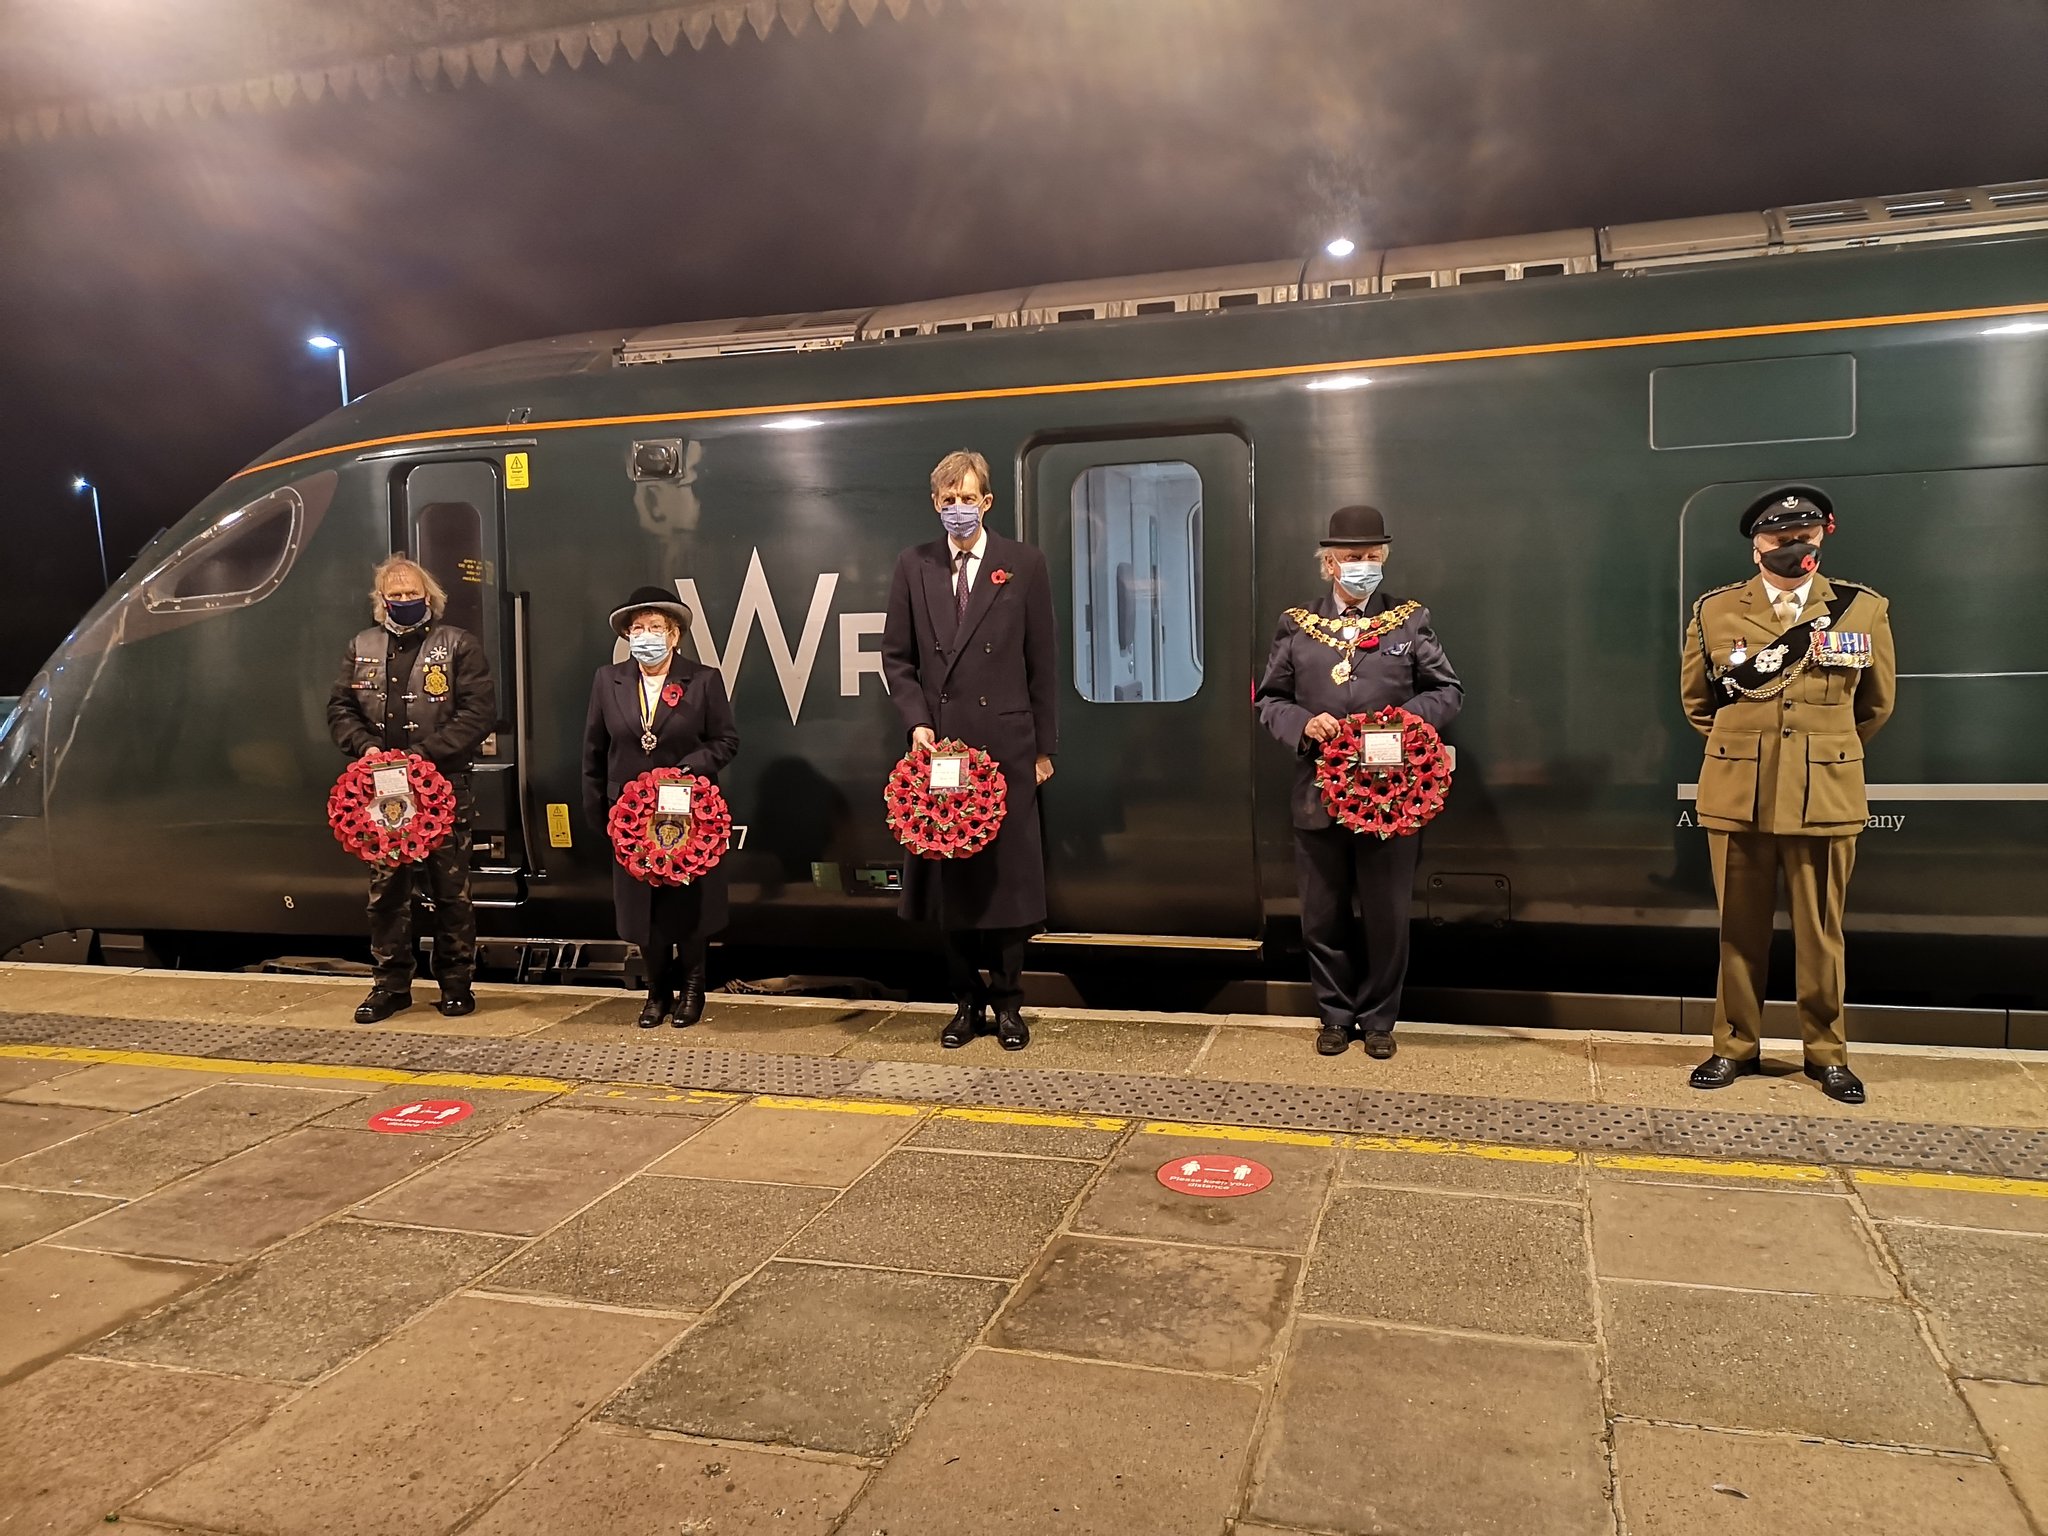 NEWS | #PoppiesToPaddington – Poppy wreaths from Hereford head to London War Memorial